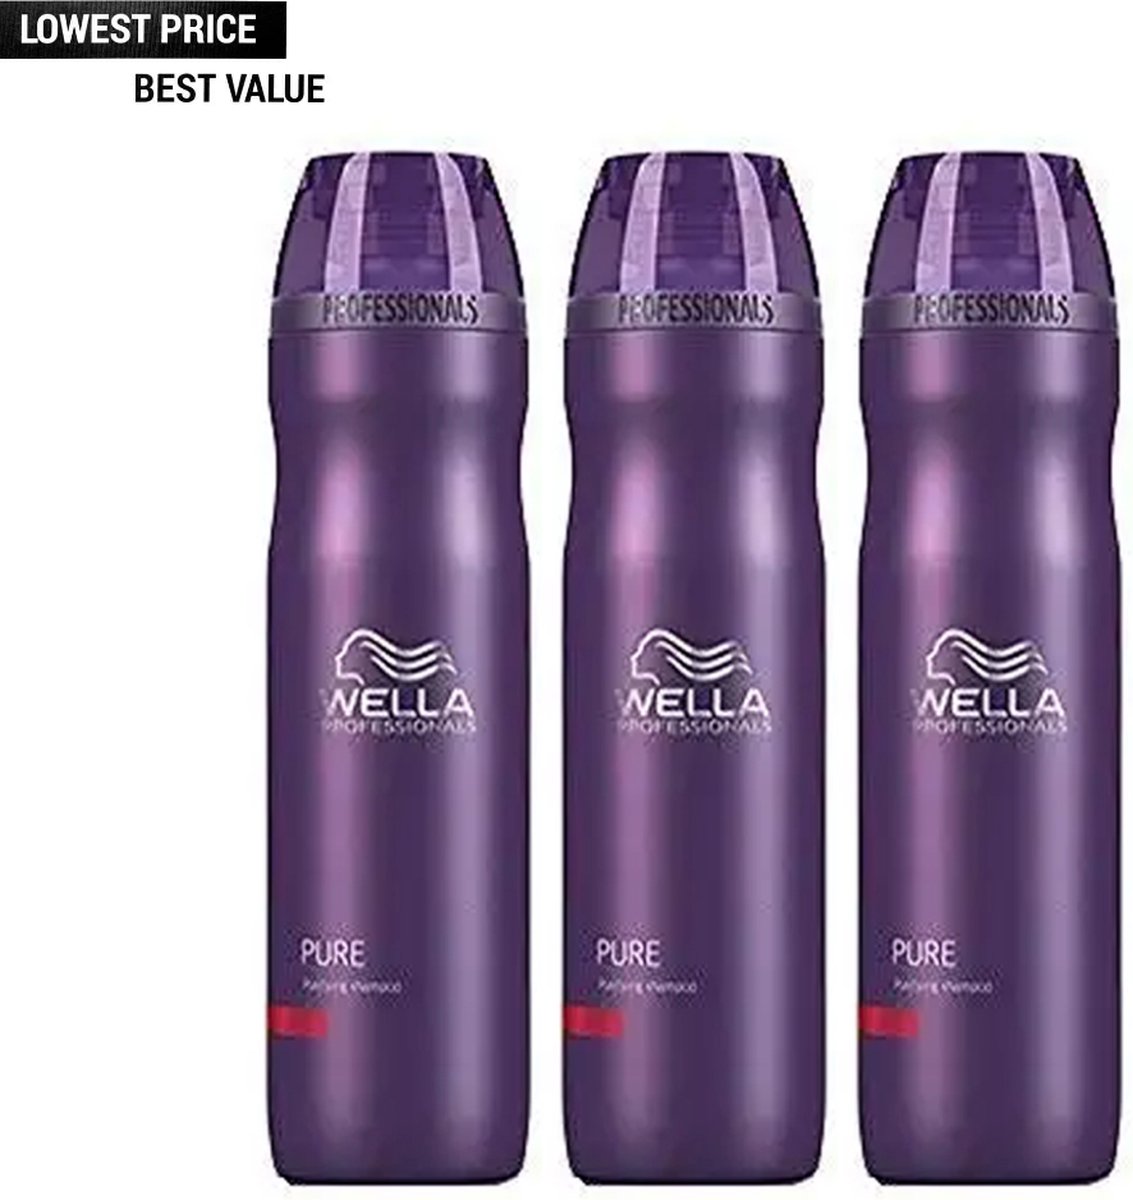 Wella Professionals Pure Shampoo Value Bundel - 3 x 250 ml